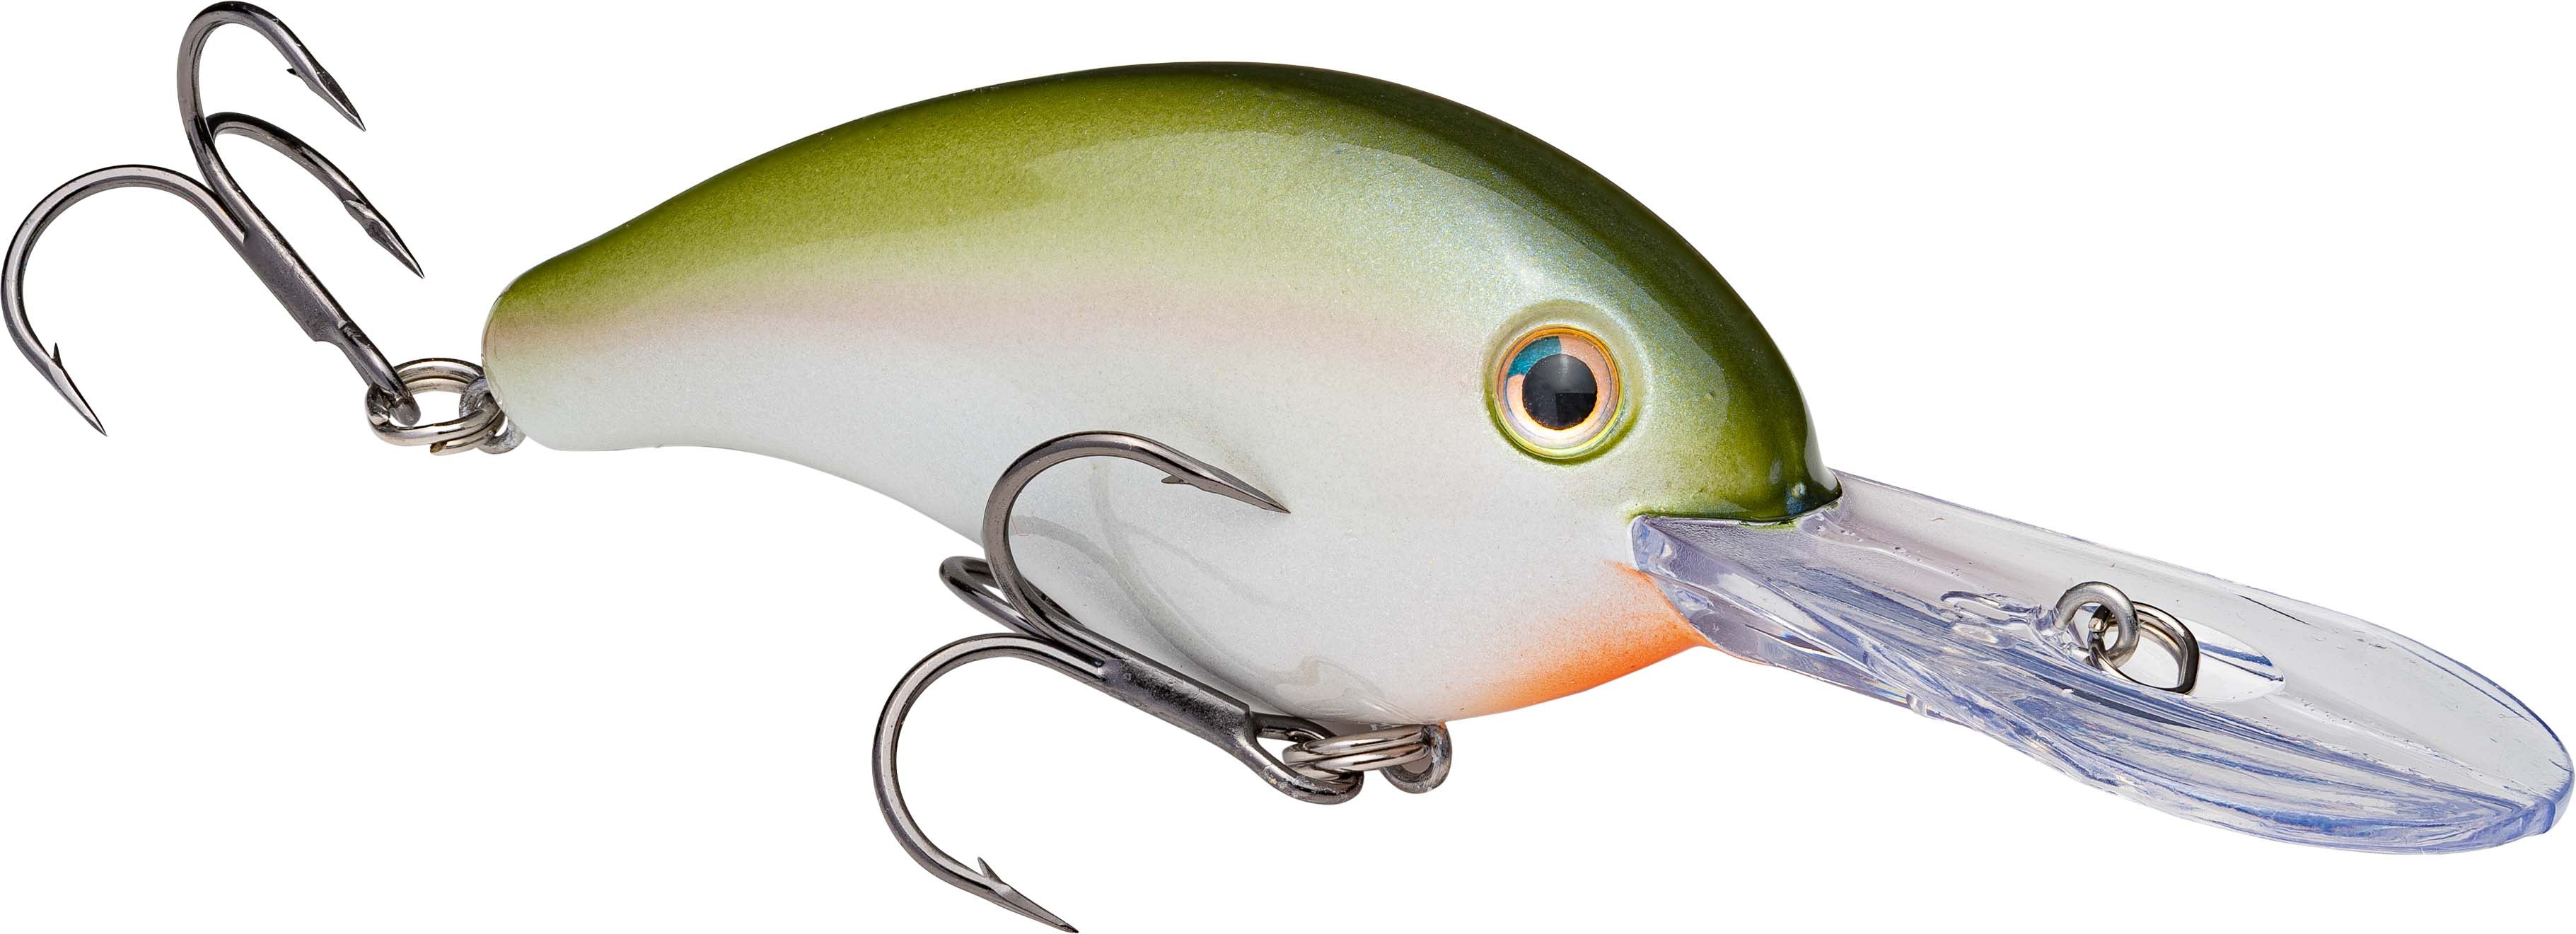 Strike King (HCHHS-584) Hybrid Hunter Shallow Hard Bait Fishing Lure, Color  584 - Oyster, 3.5, 1 oz, Dives 1-3 Feet, 3D Eyes